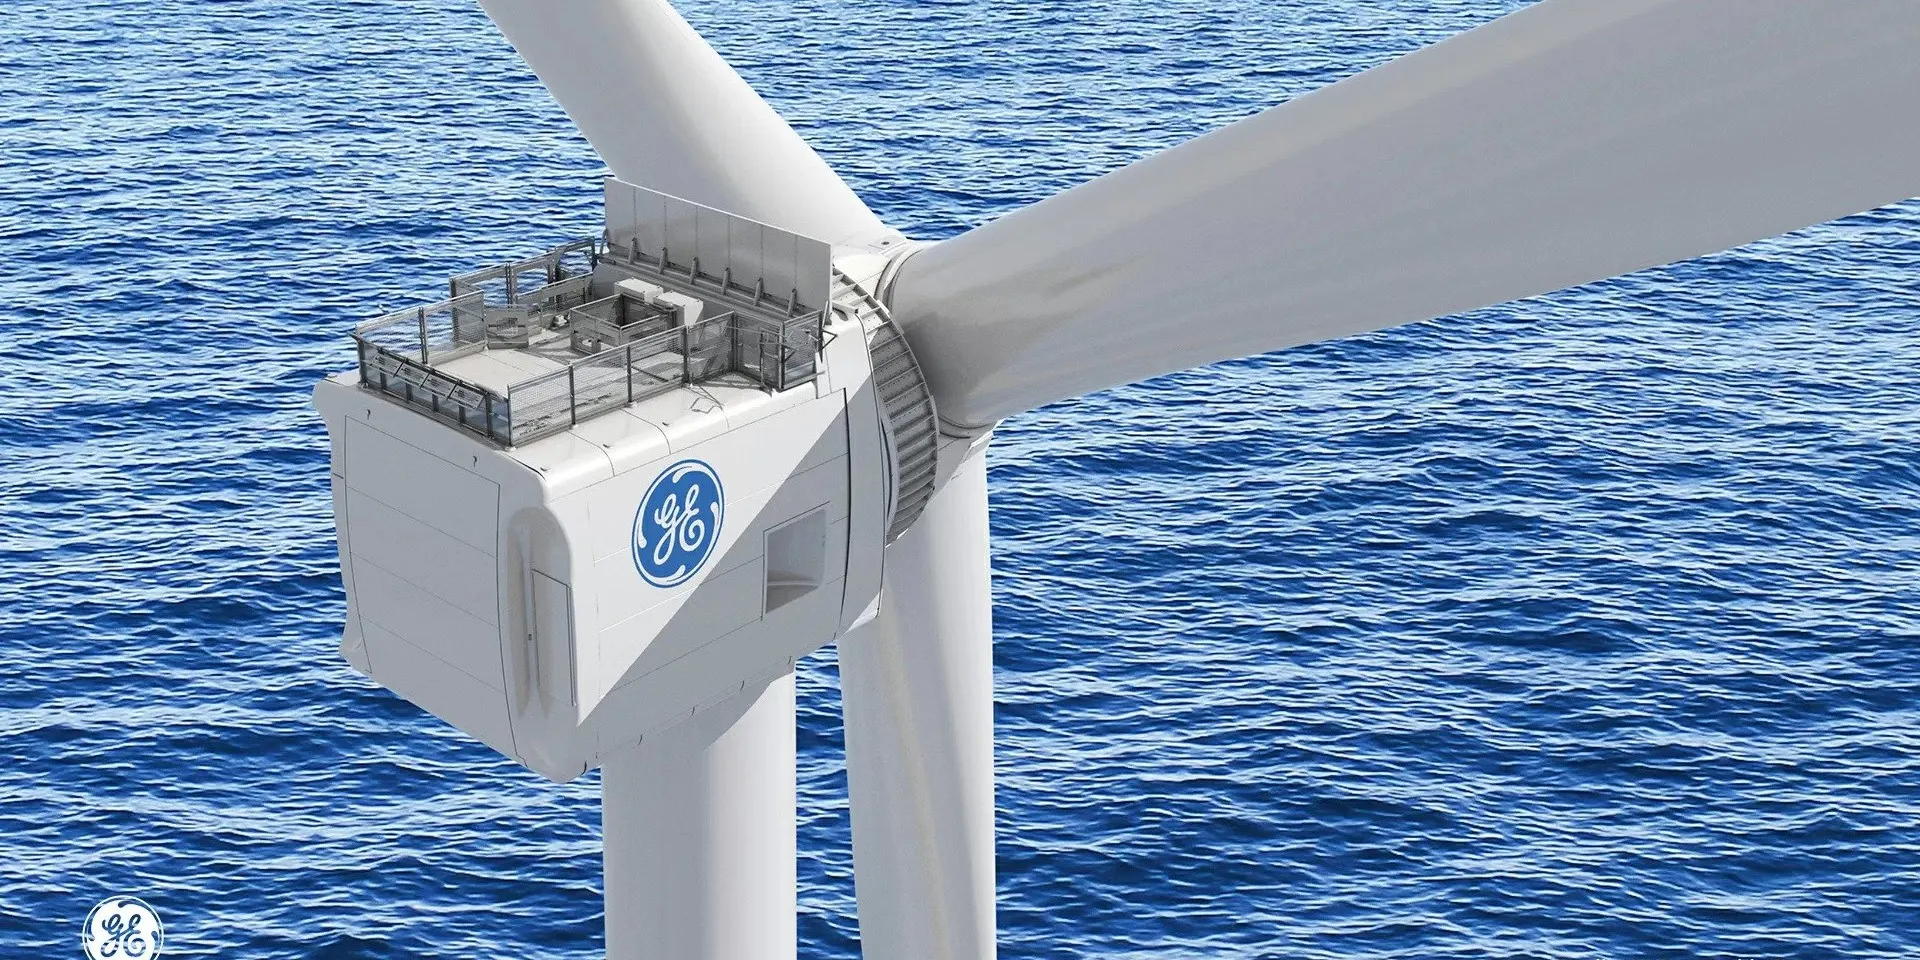 ge-haliade-x-offshore-wind-turbine-3d-1-1920x1080-1.webp